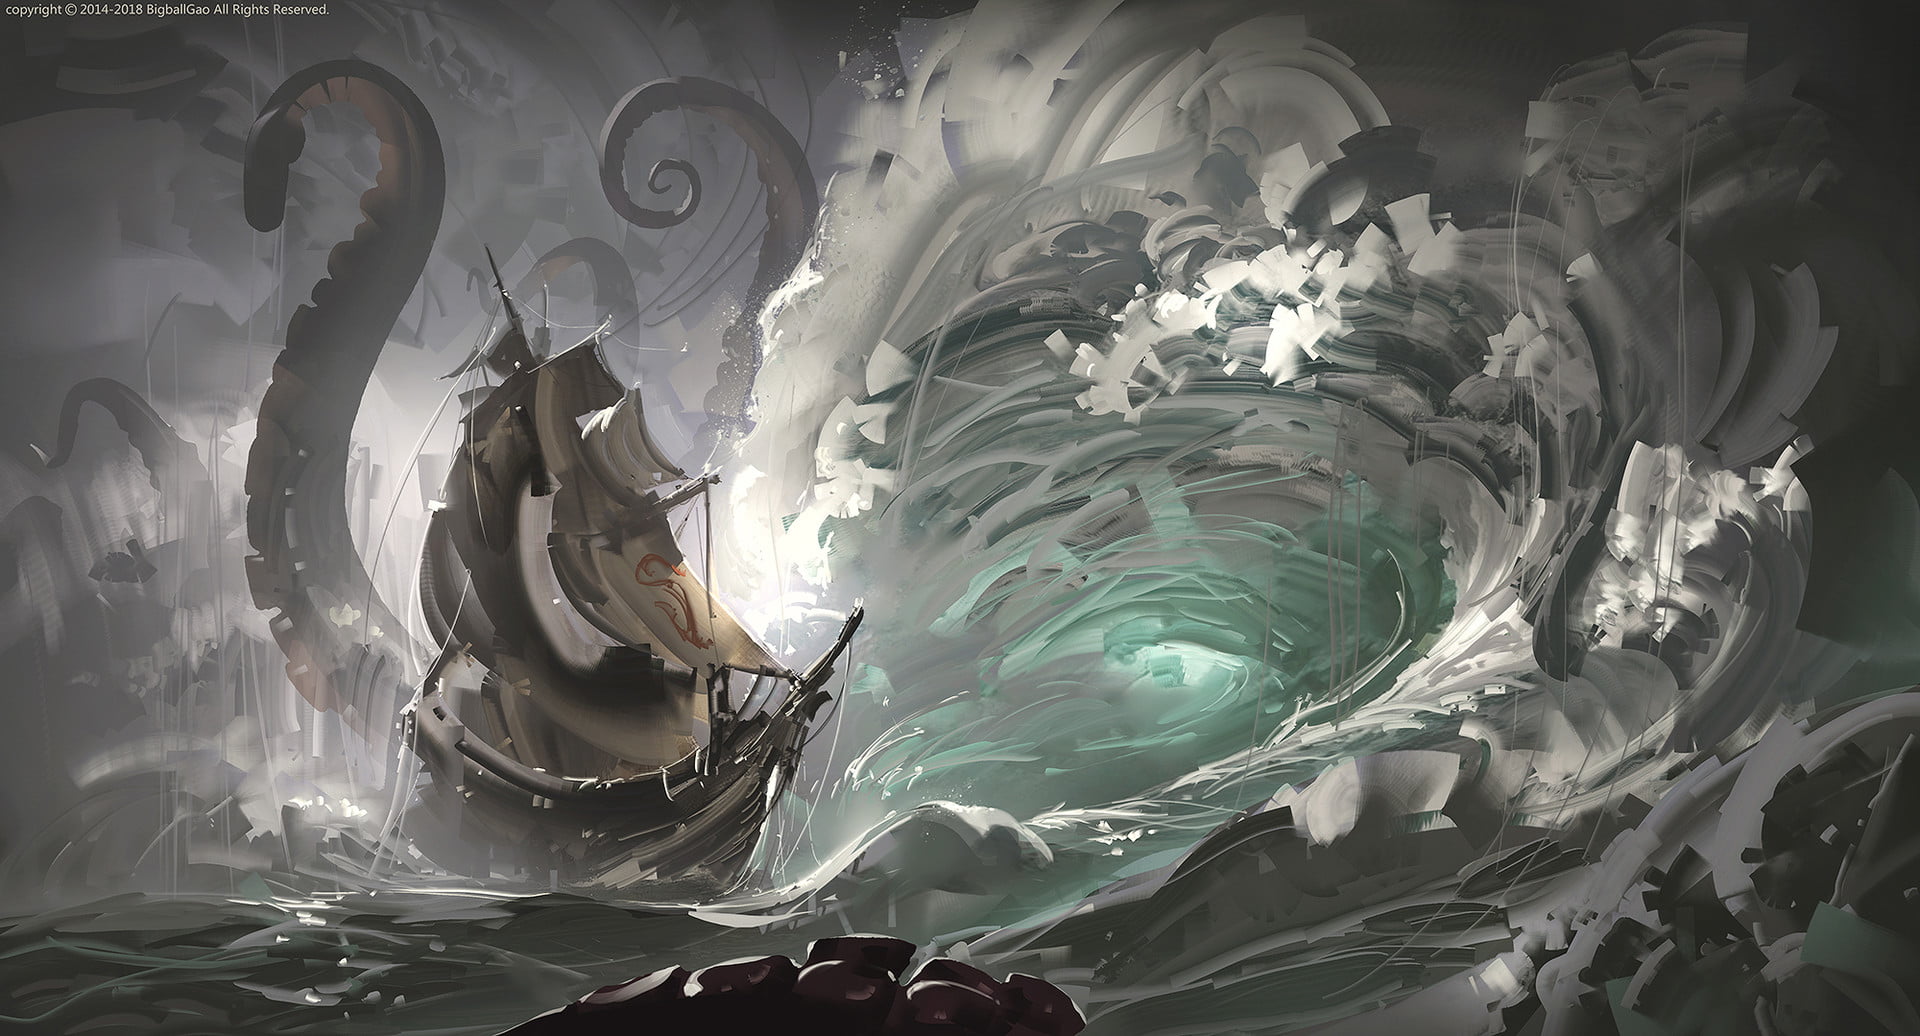 gray boat on body of water illustration, digital art, artwork, Kraken, sea